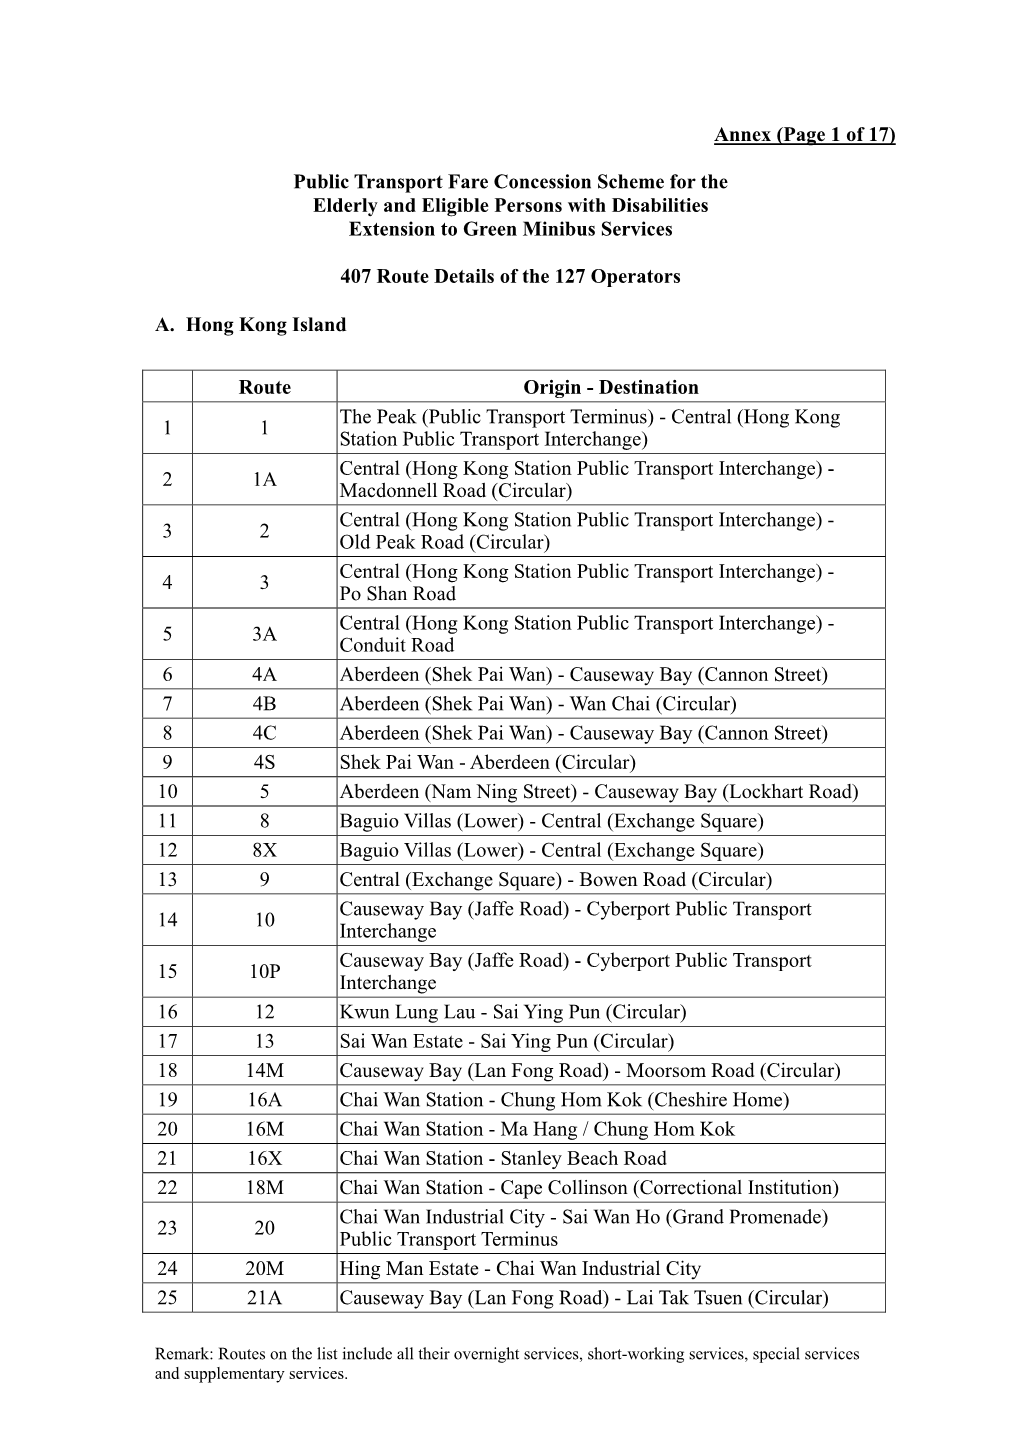 Annex (Page 1 of 17) Public Transport Fare Concession Scheme for The